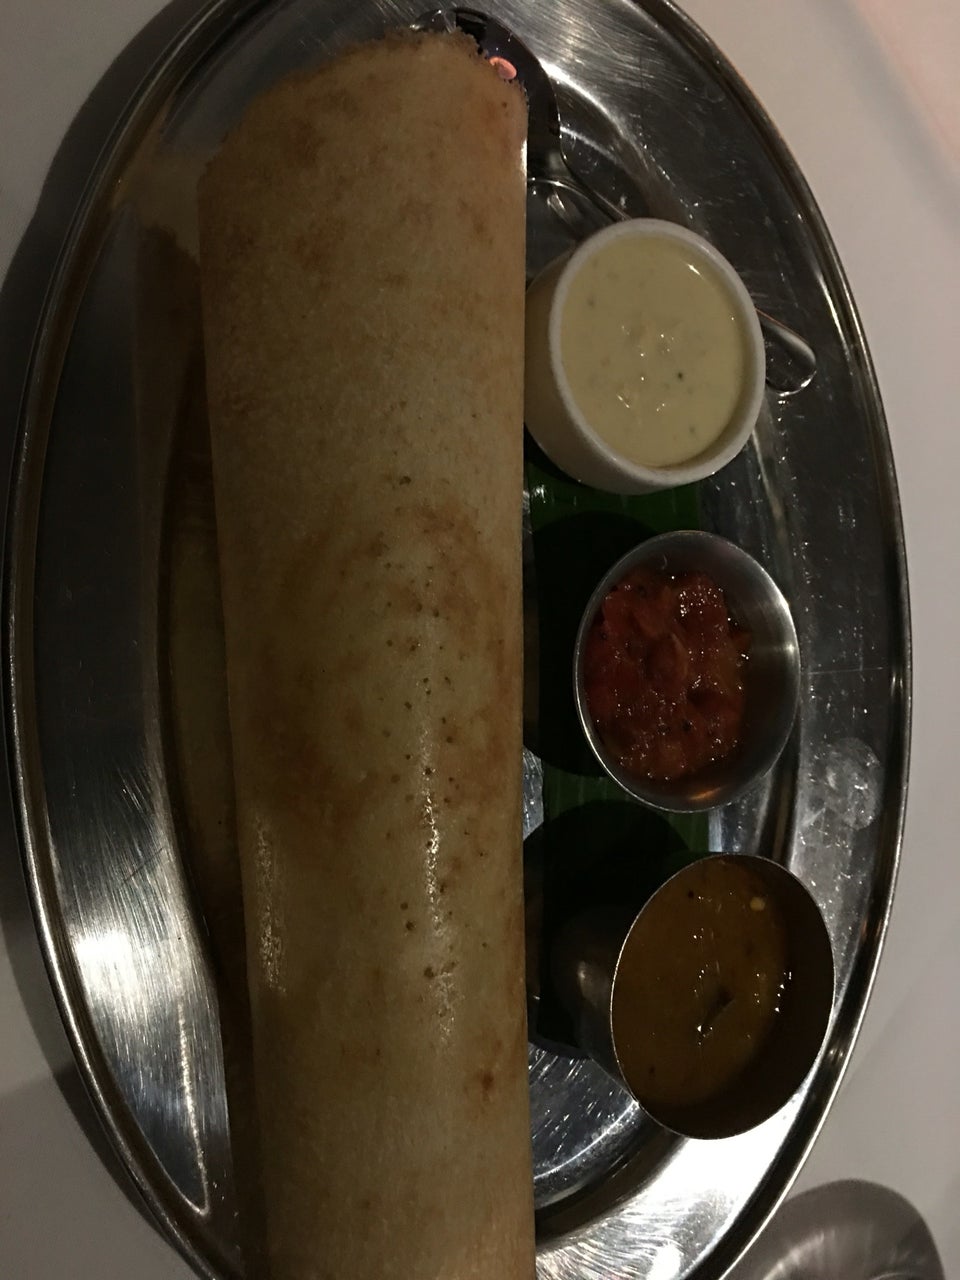 Photo of Malabar South Indian Restaurant